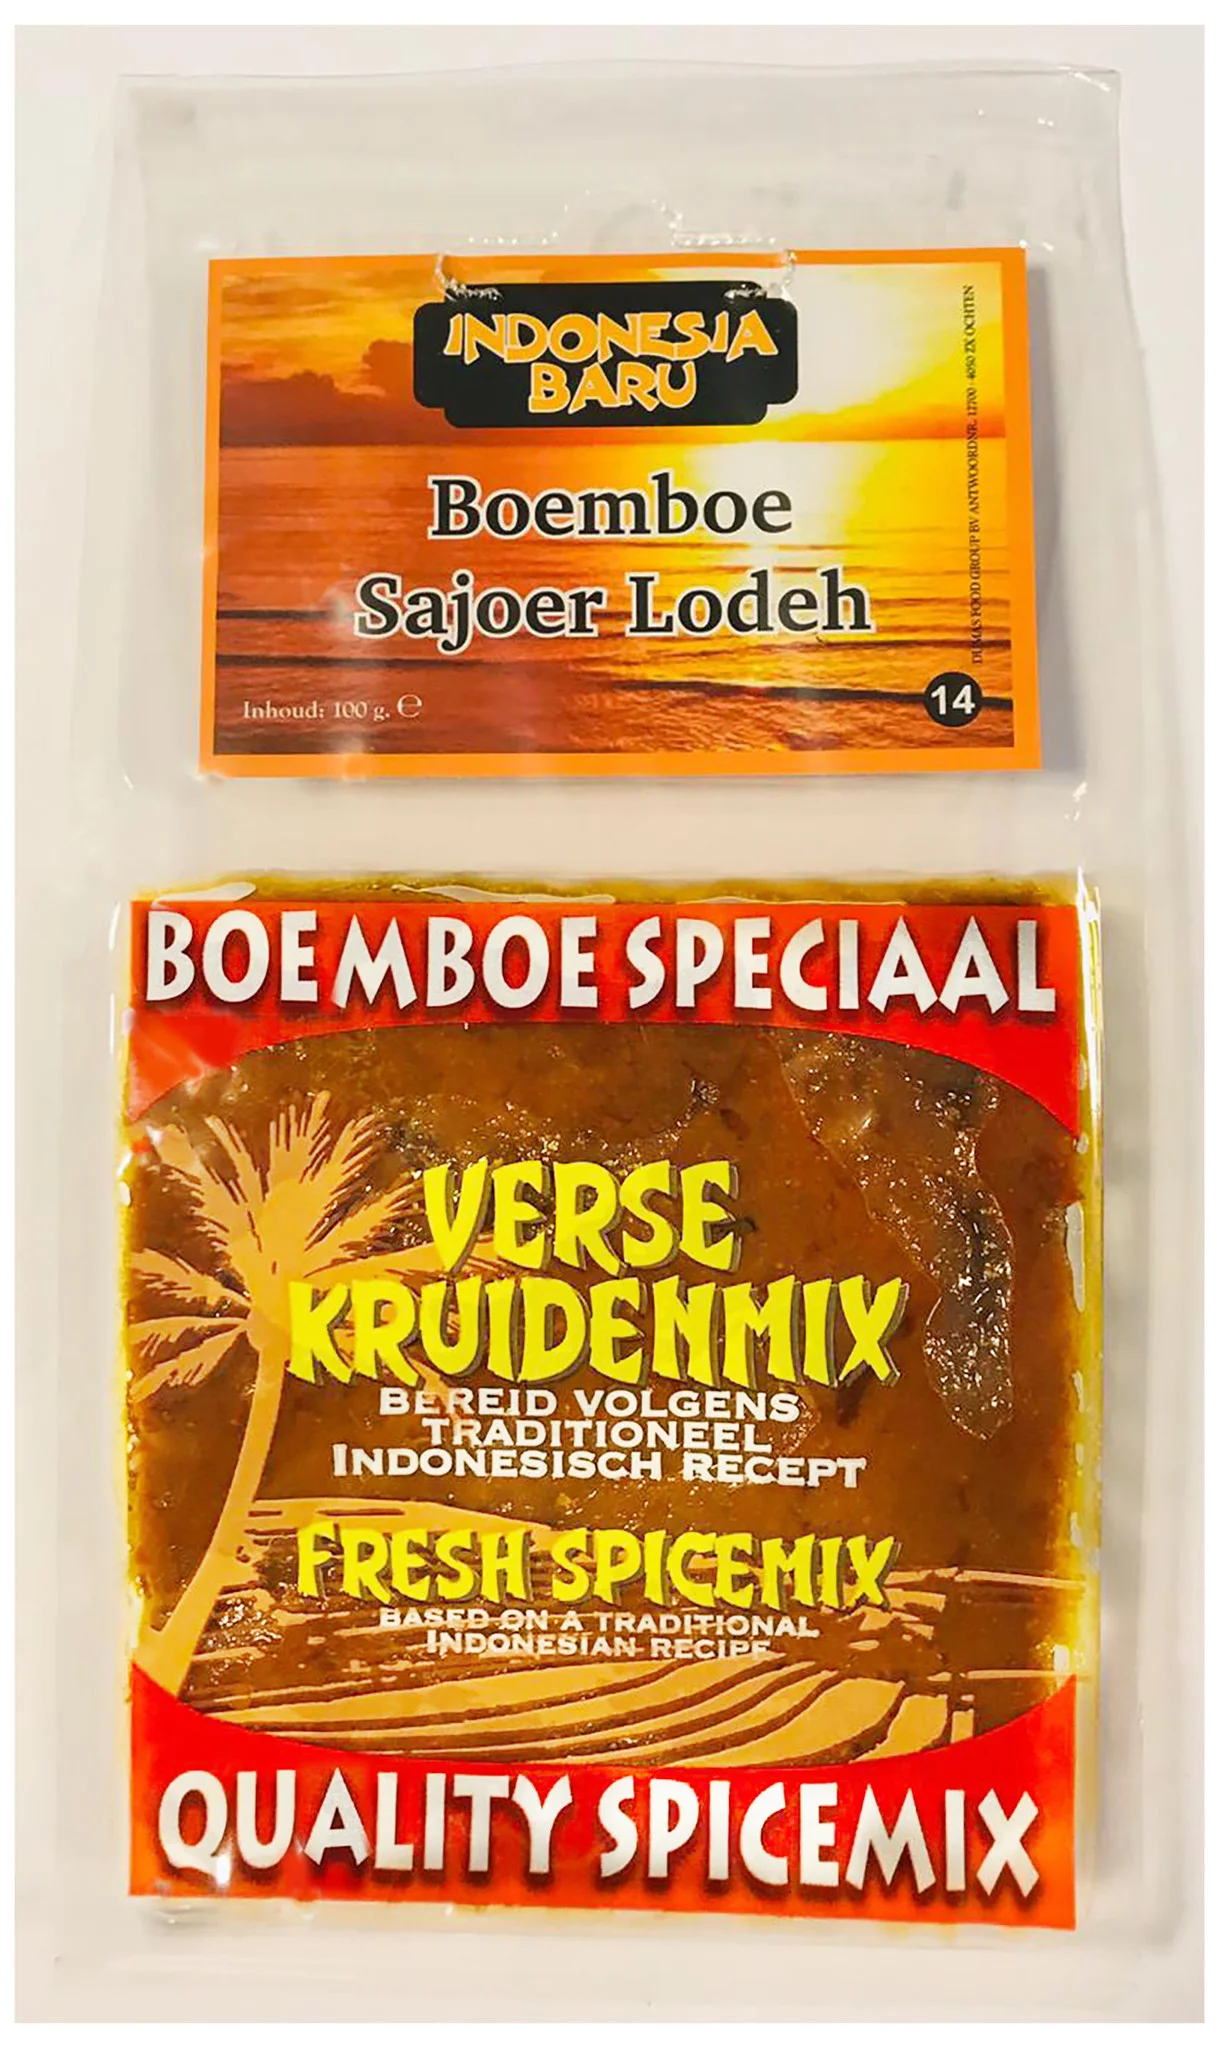 Boemboe Sajoer Lodeh